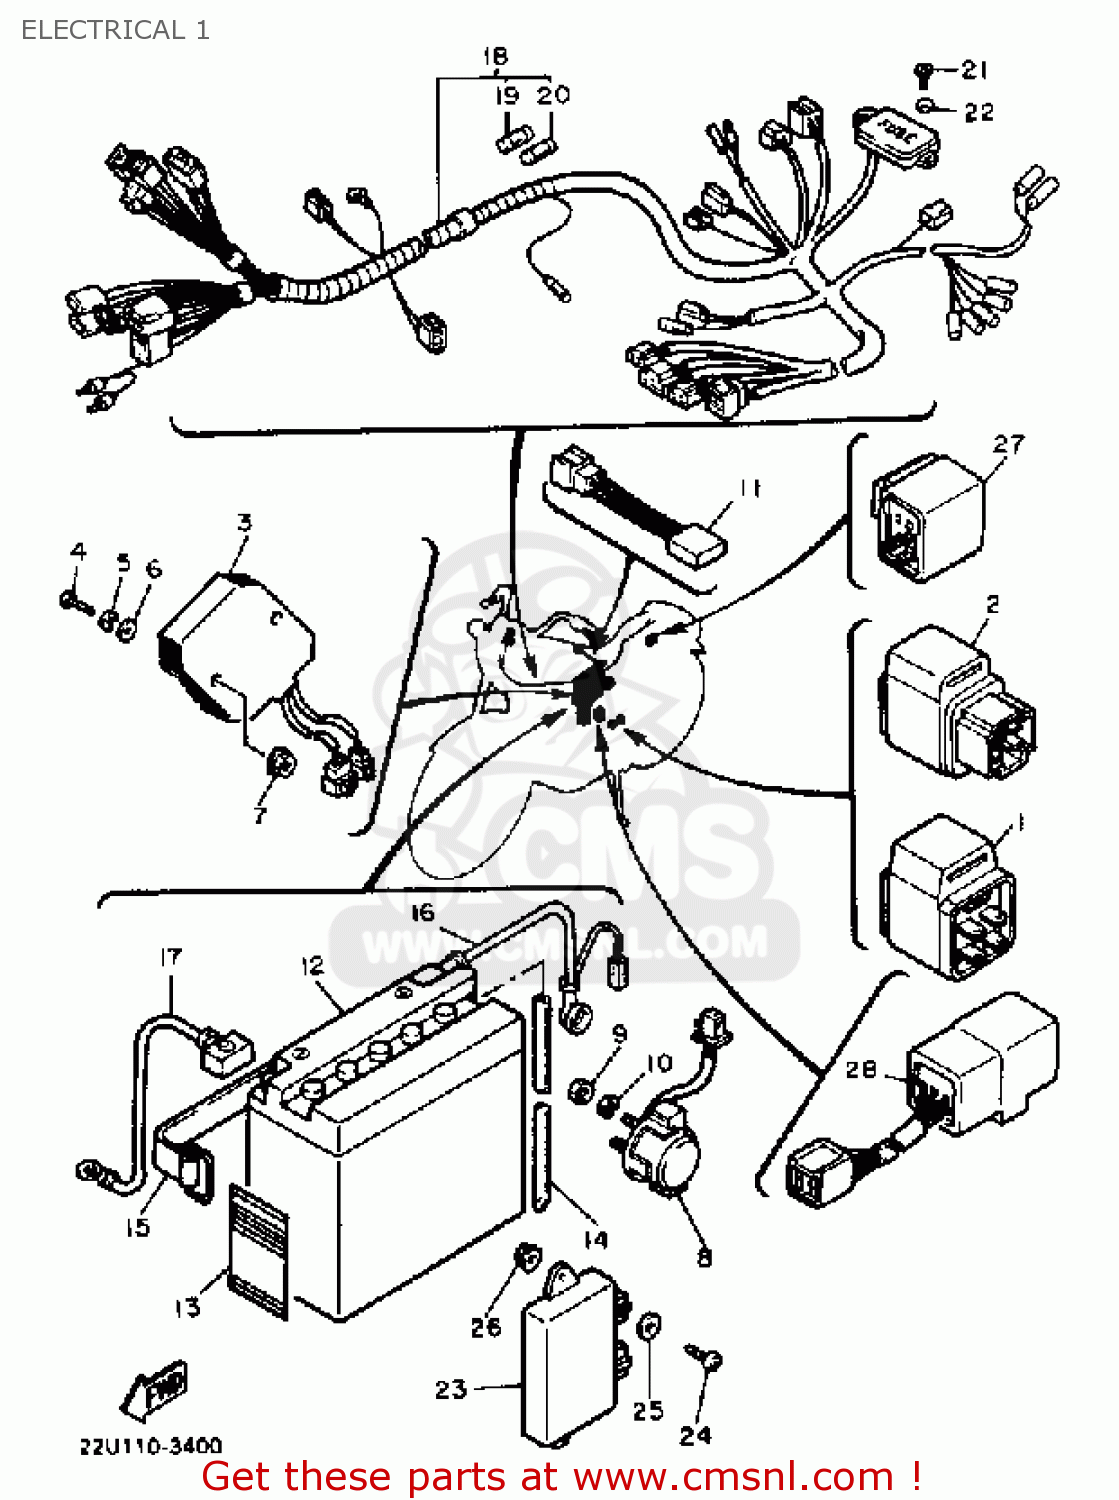 Subaru Xv Crosstrek Backup Camera Wiring Diagram from images.cmsnl.com